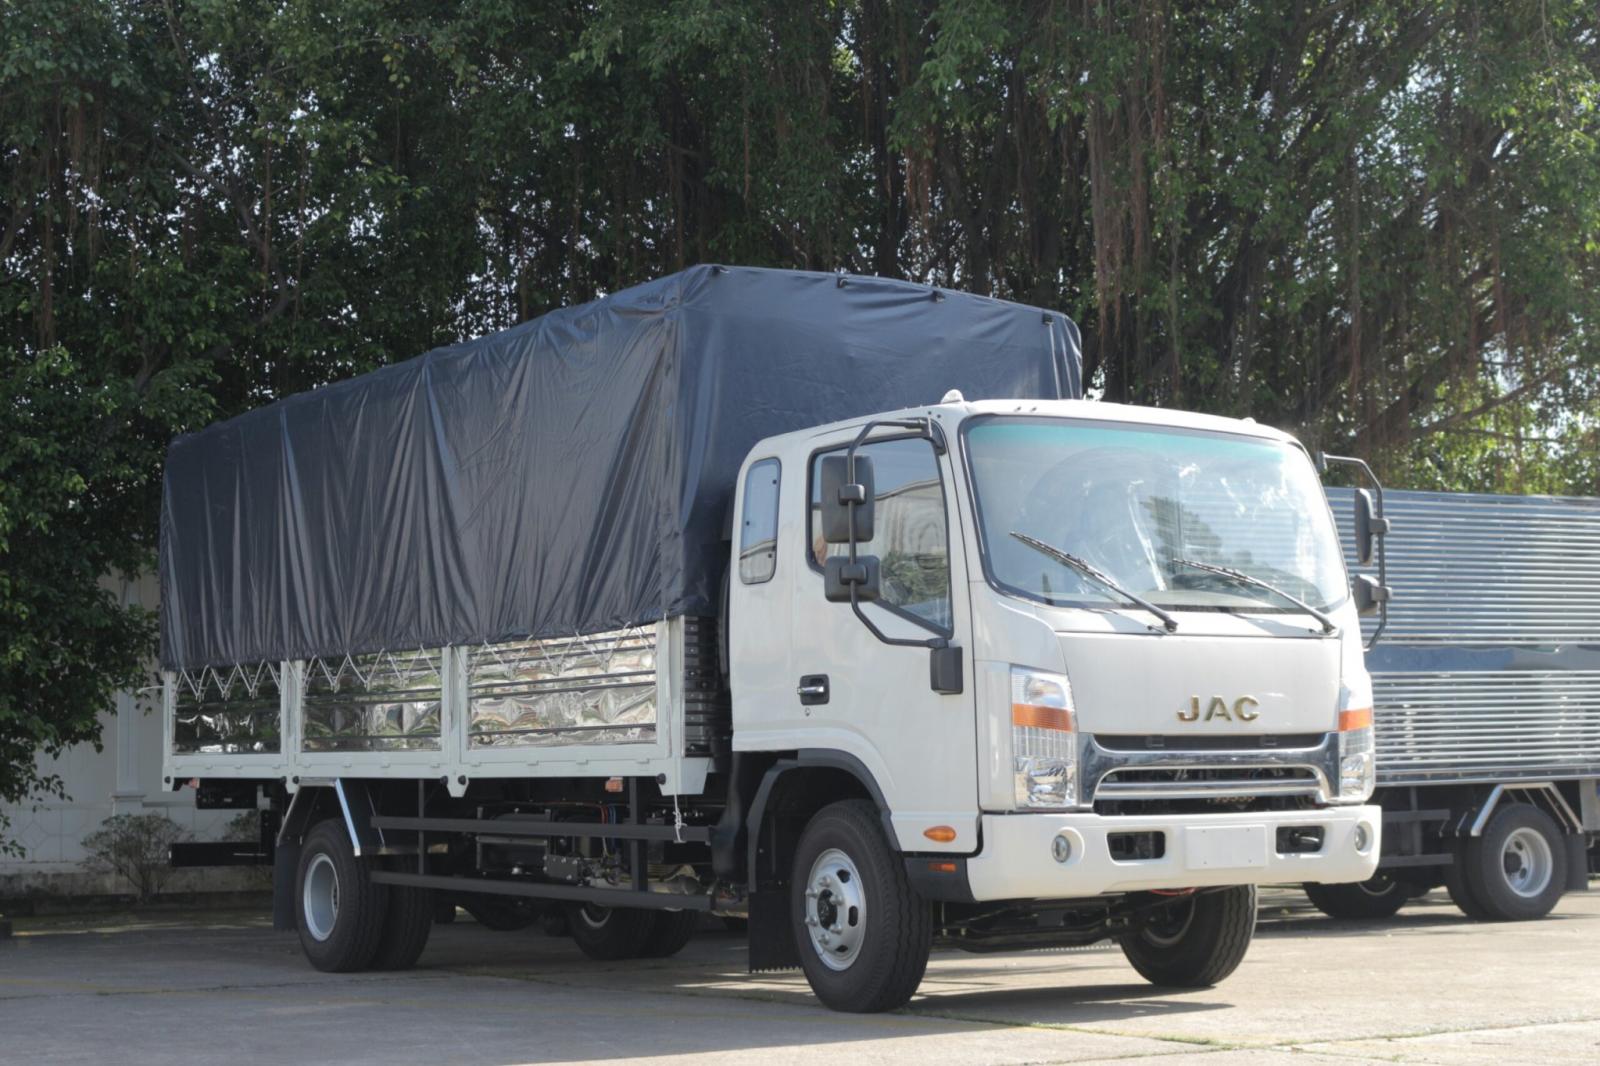 Xe tải 5 tấn - dưới 10 tấn 2019 - Xe JAC N650 plus xe tải trả góp